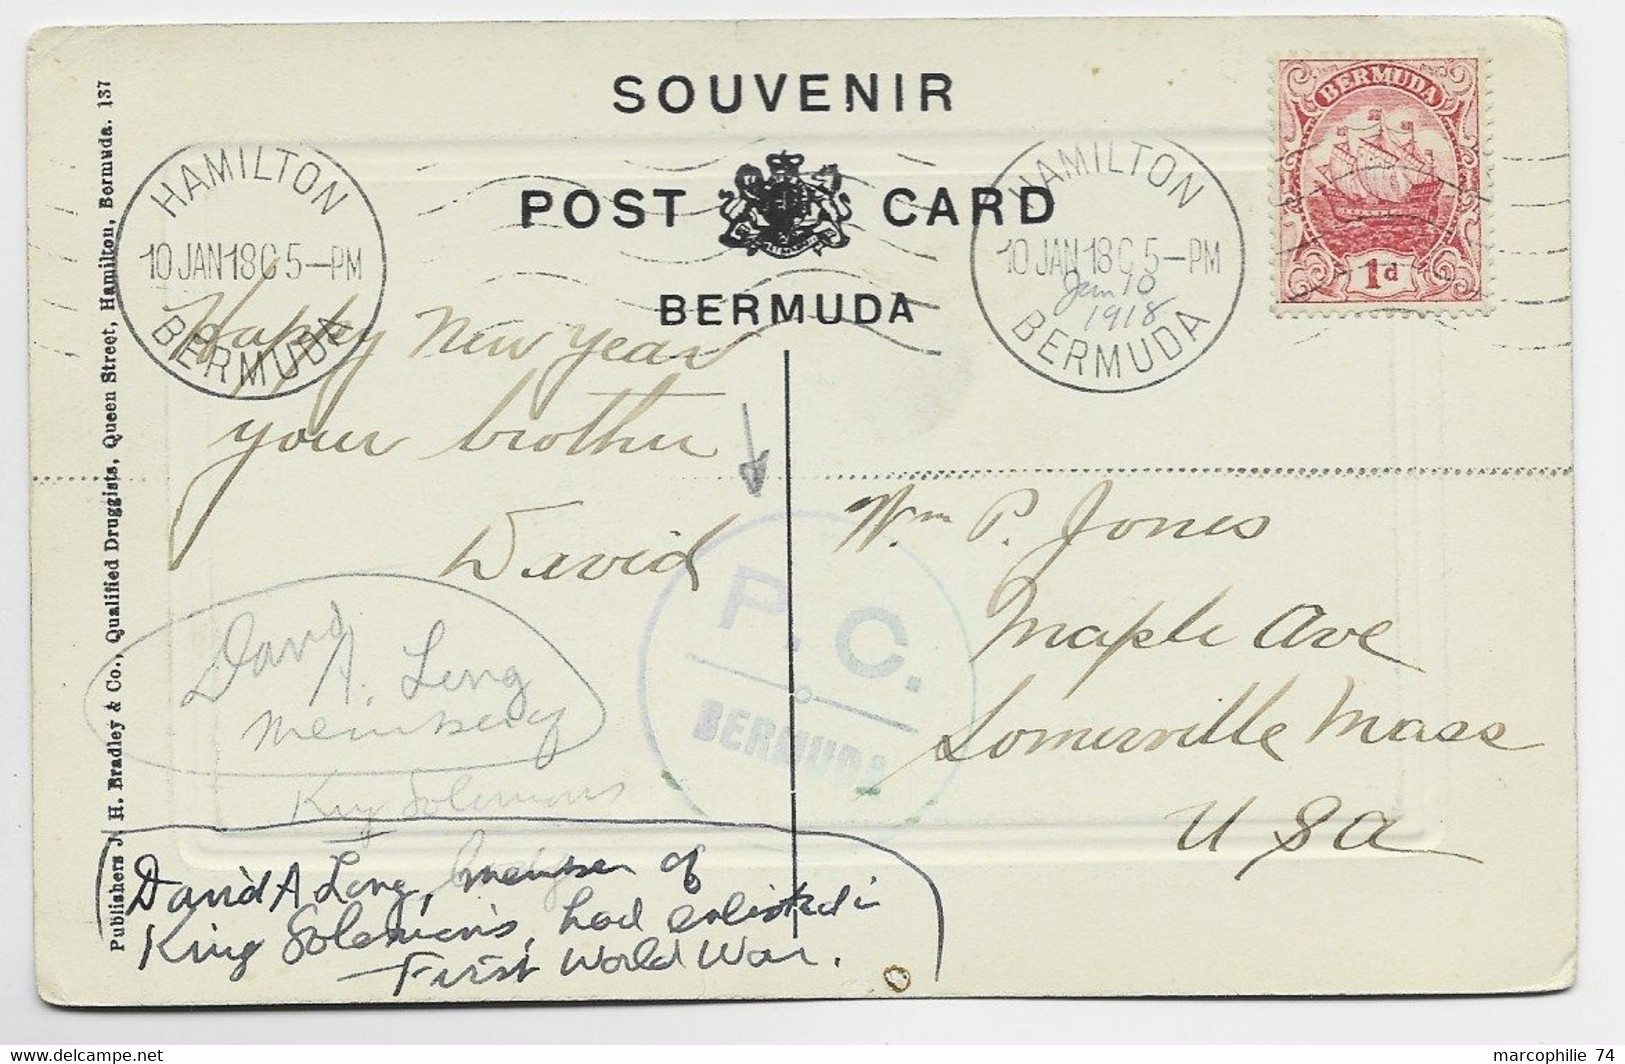 BERMUDAS 1D SOLO CARD POST HAMILTON 10 JAN 1918 TO USA CENSOR P.C. BERMUDAS - Bermuda